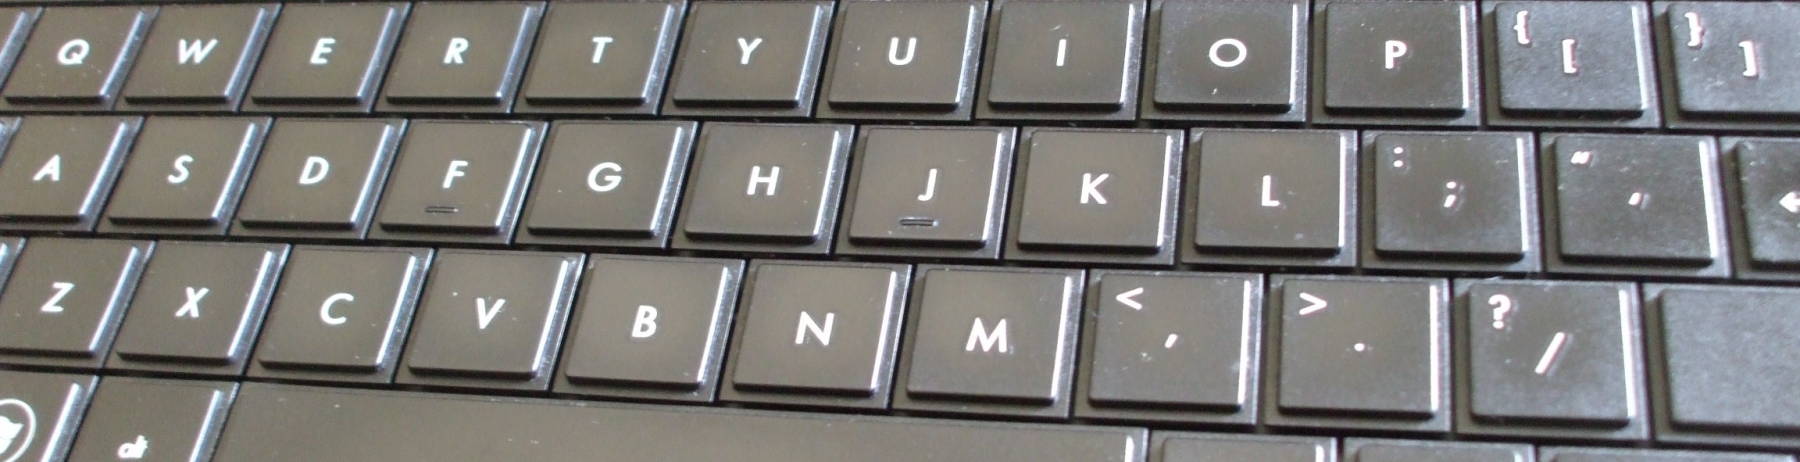 UNIX / Linux keyboard.